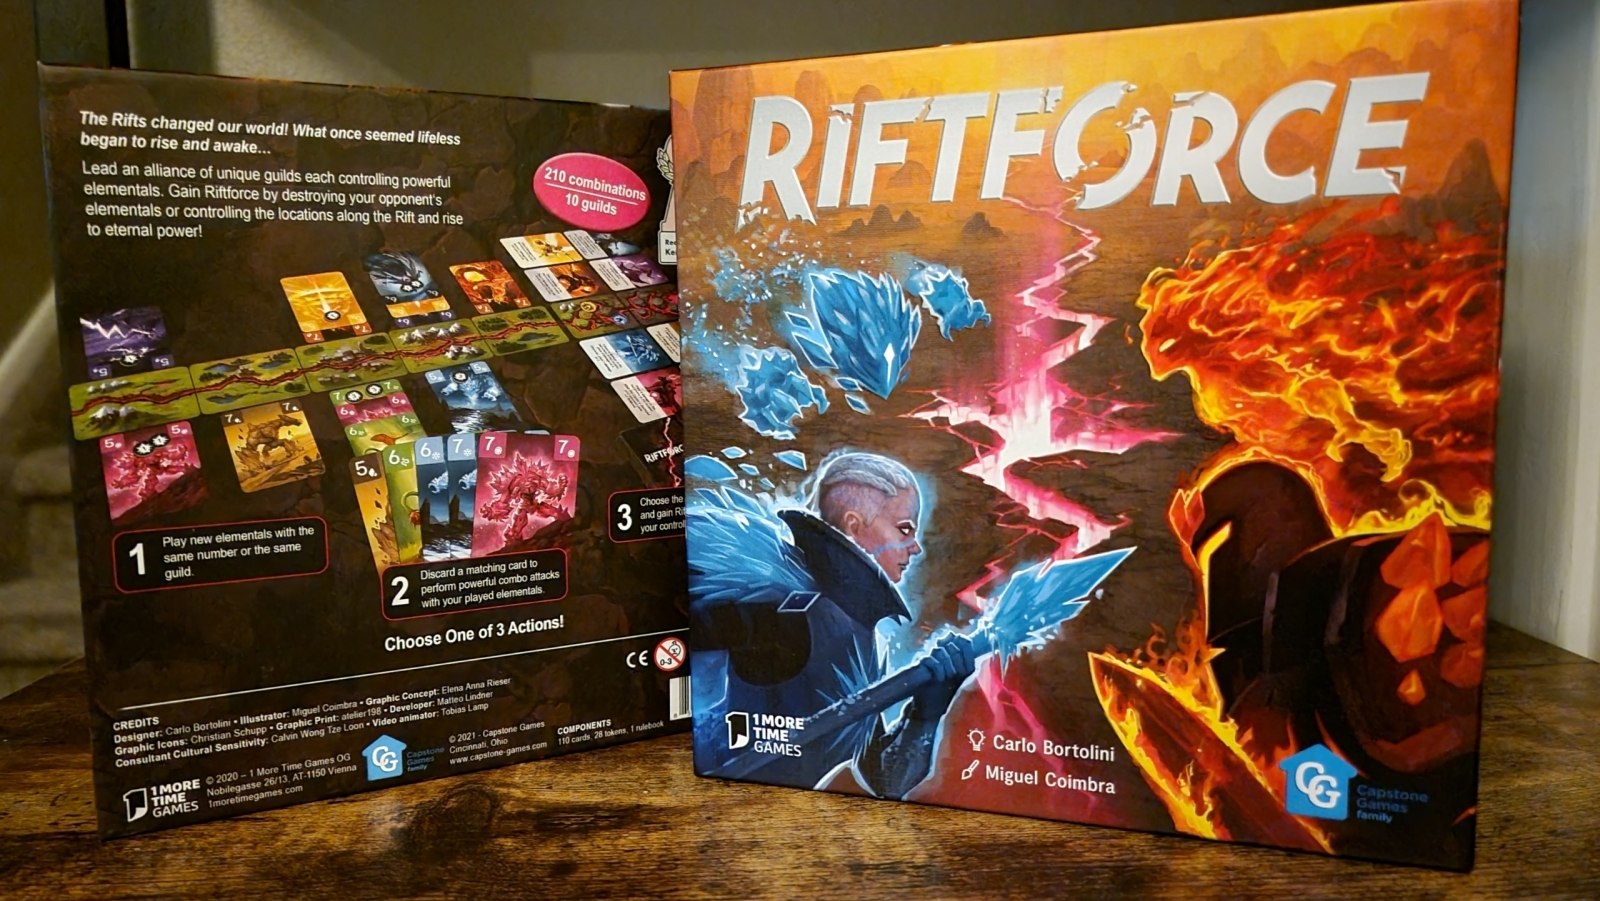 Riftforce - A Game Review Flowchart — Meeple Mountain